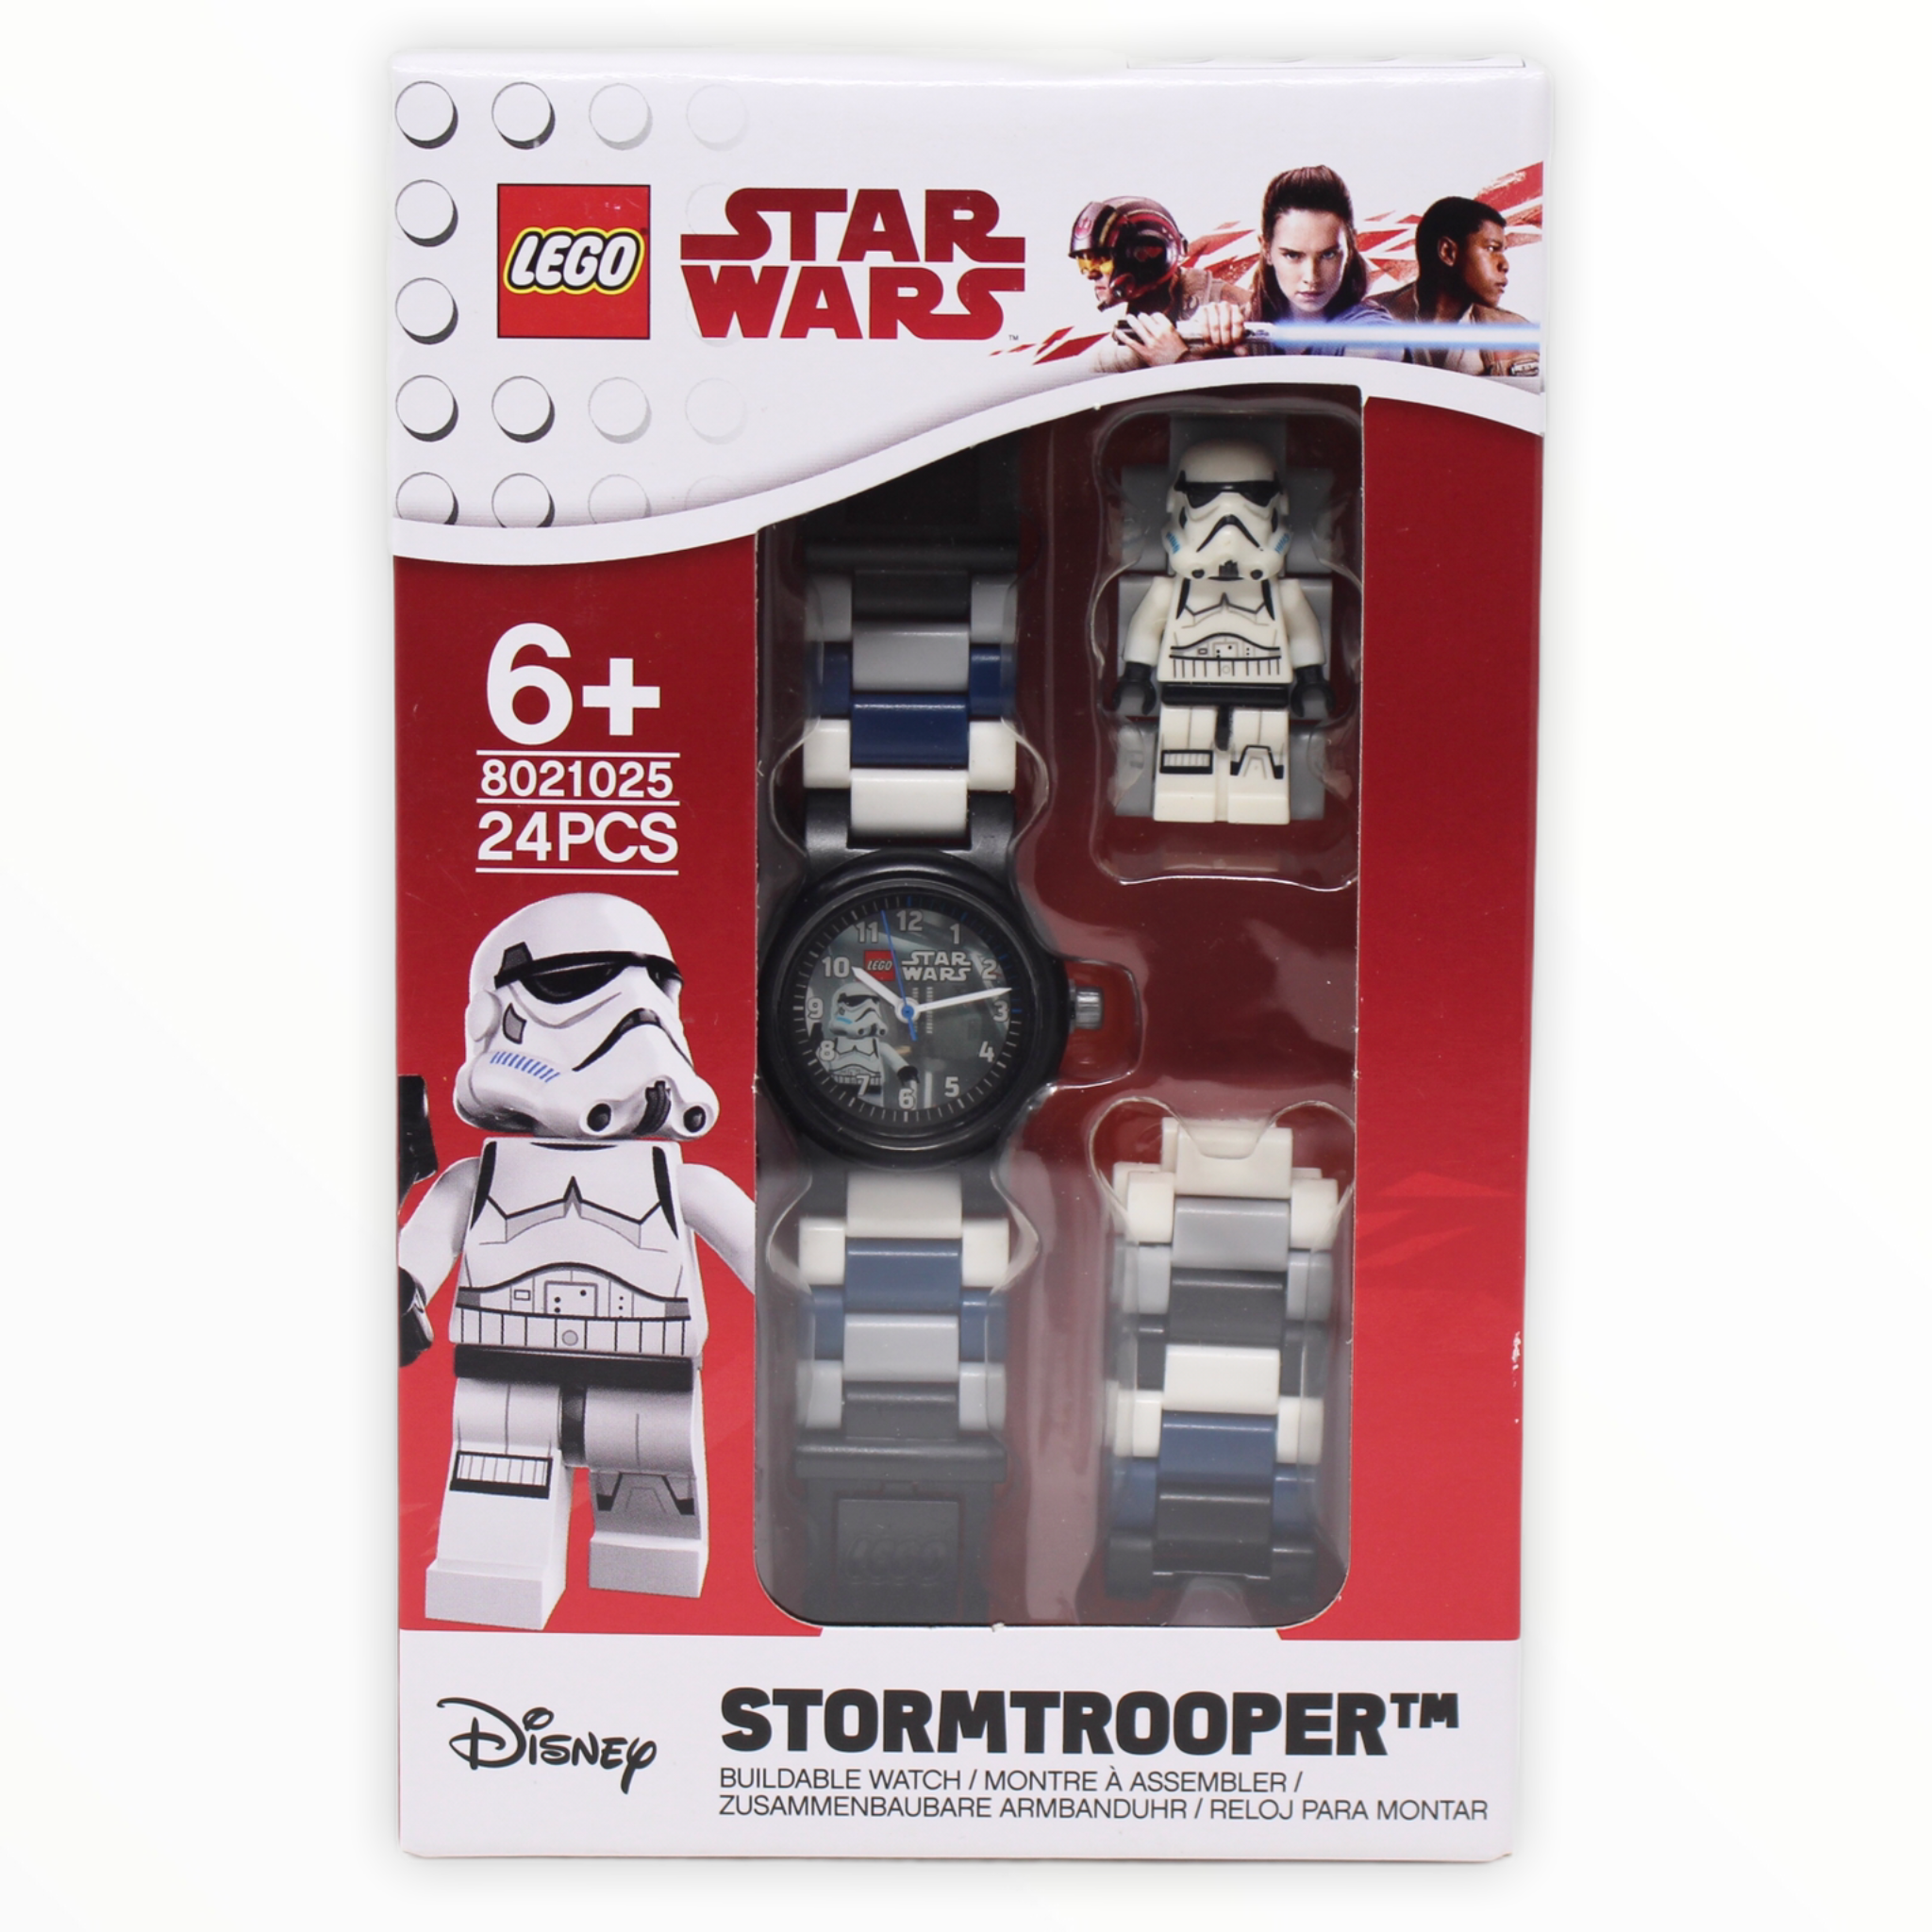 LEGO Star Wars Watch Set Stormtrooper 8021025